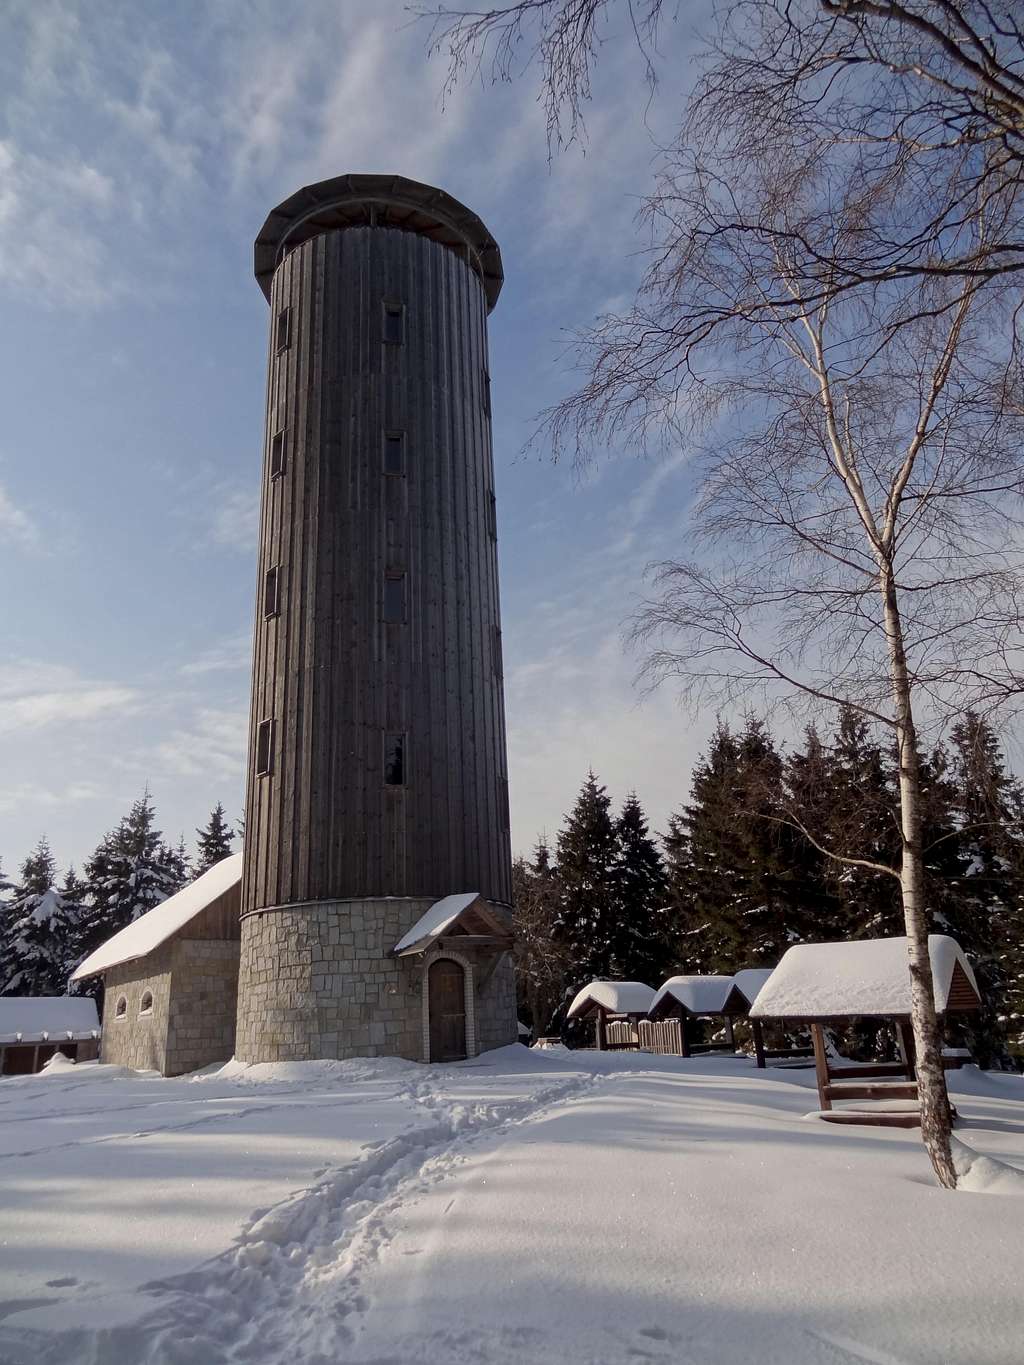 Borówkowa Góra outlook tower